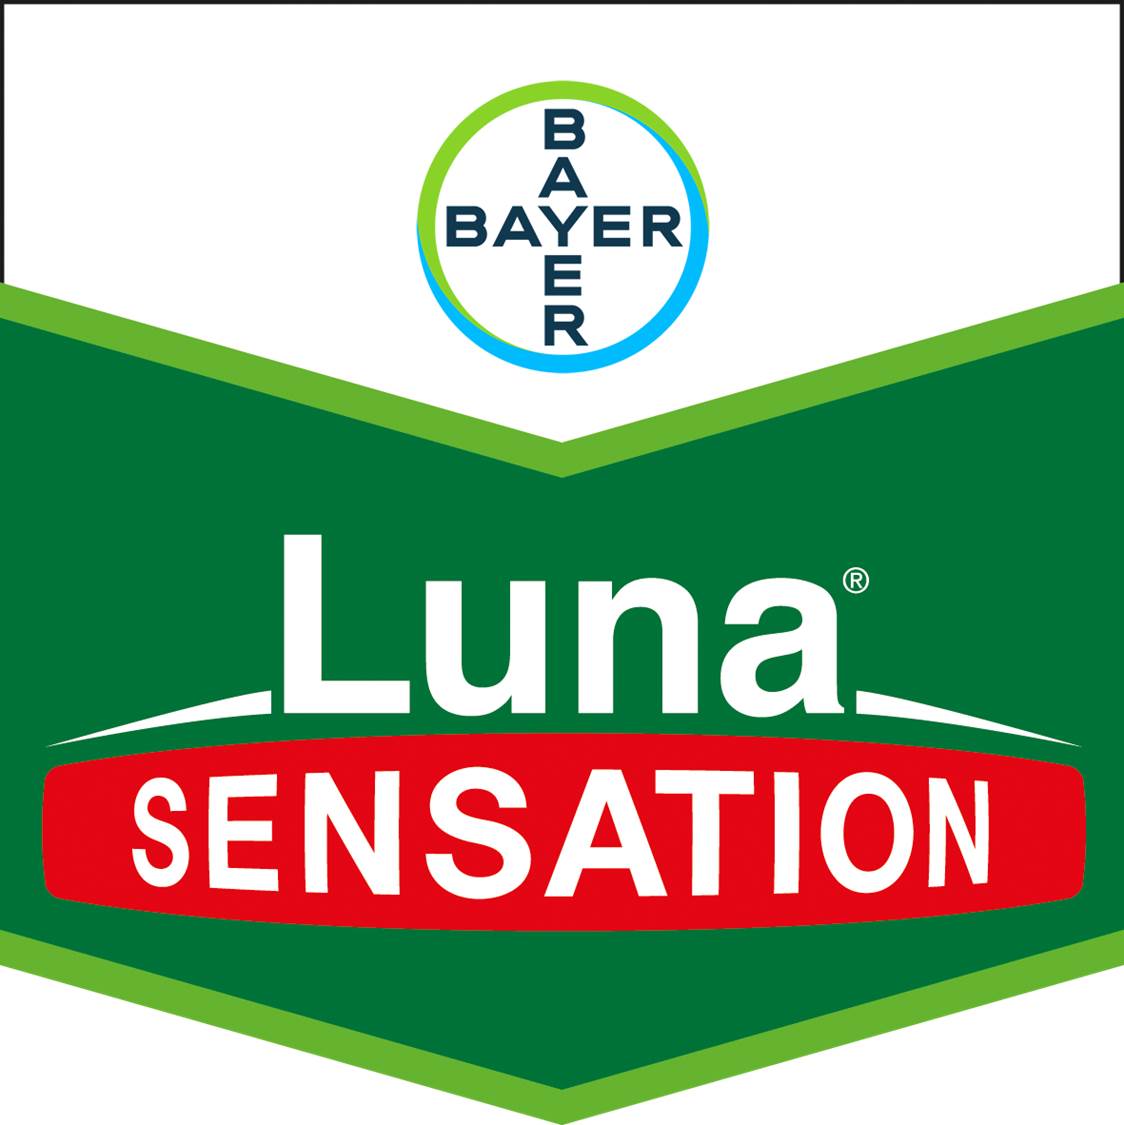 luna sensation